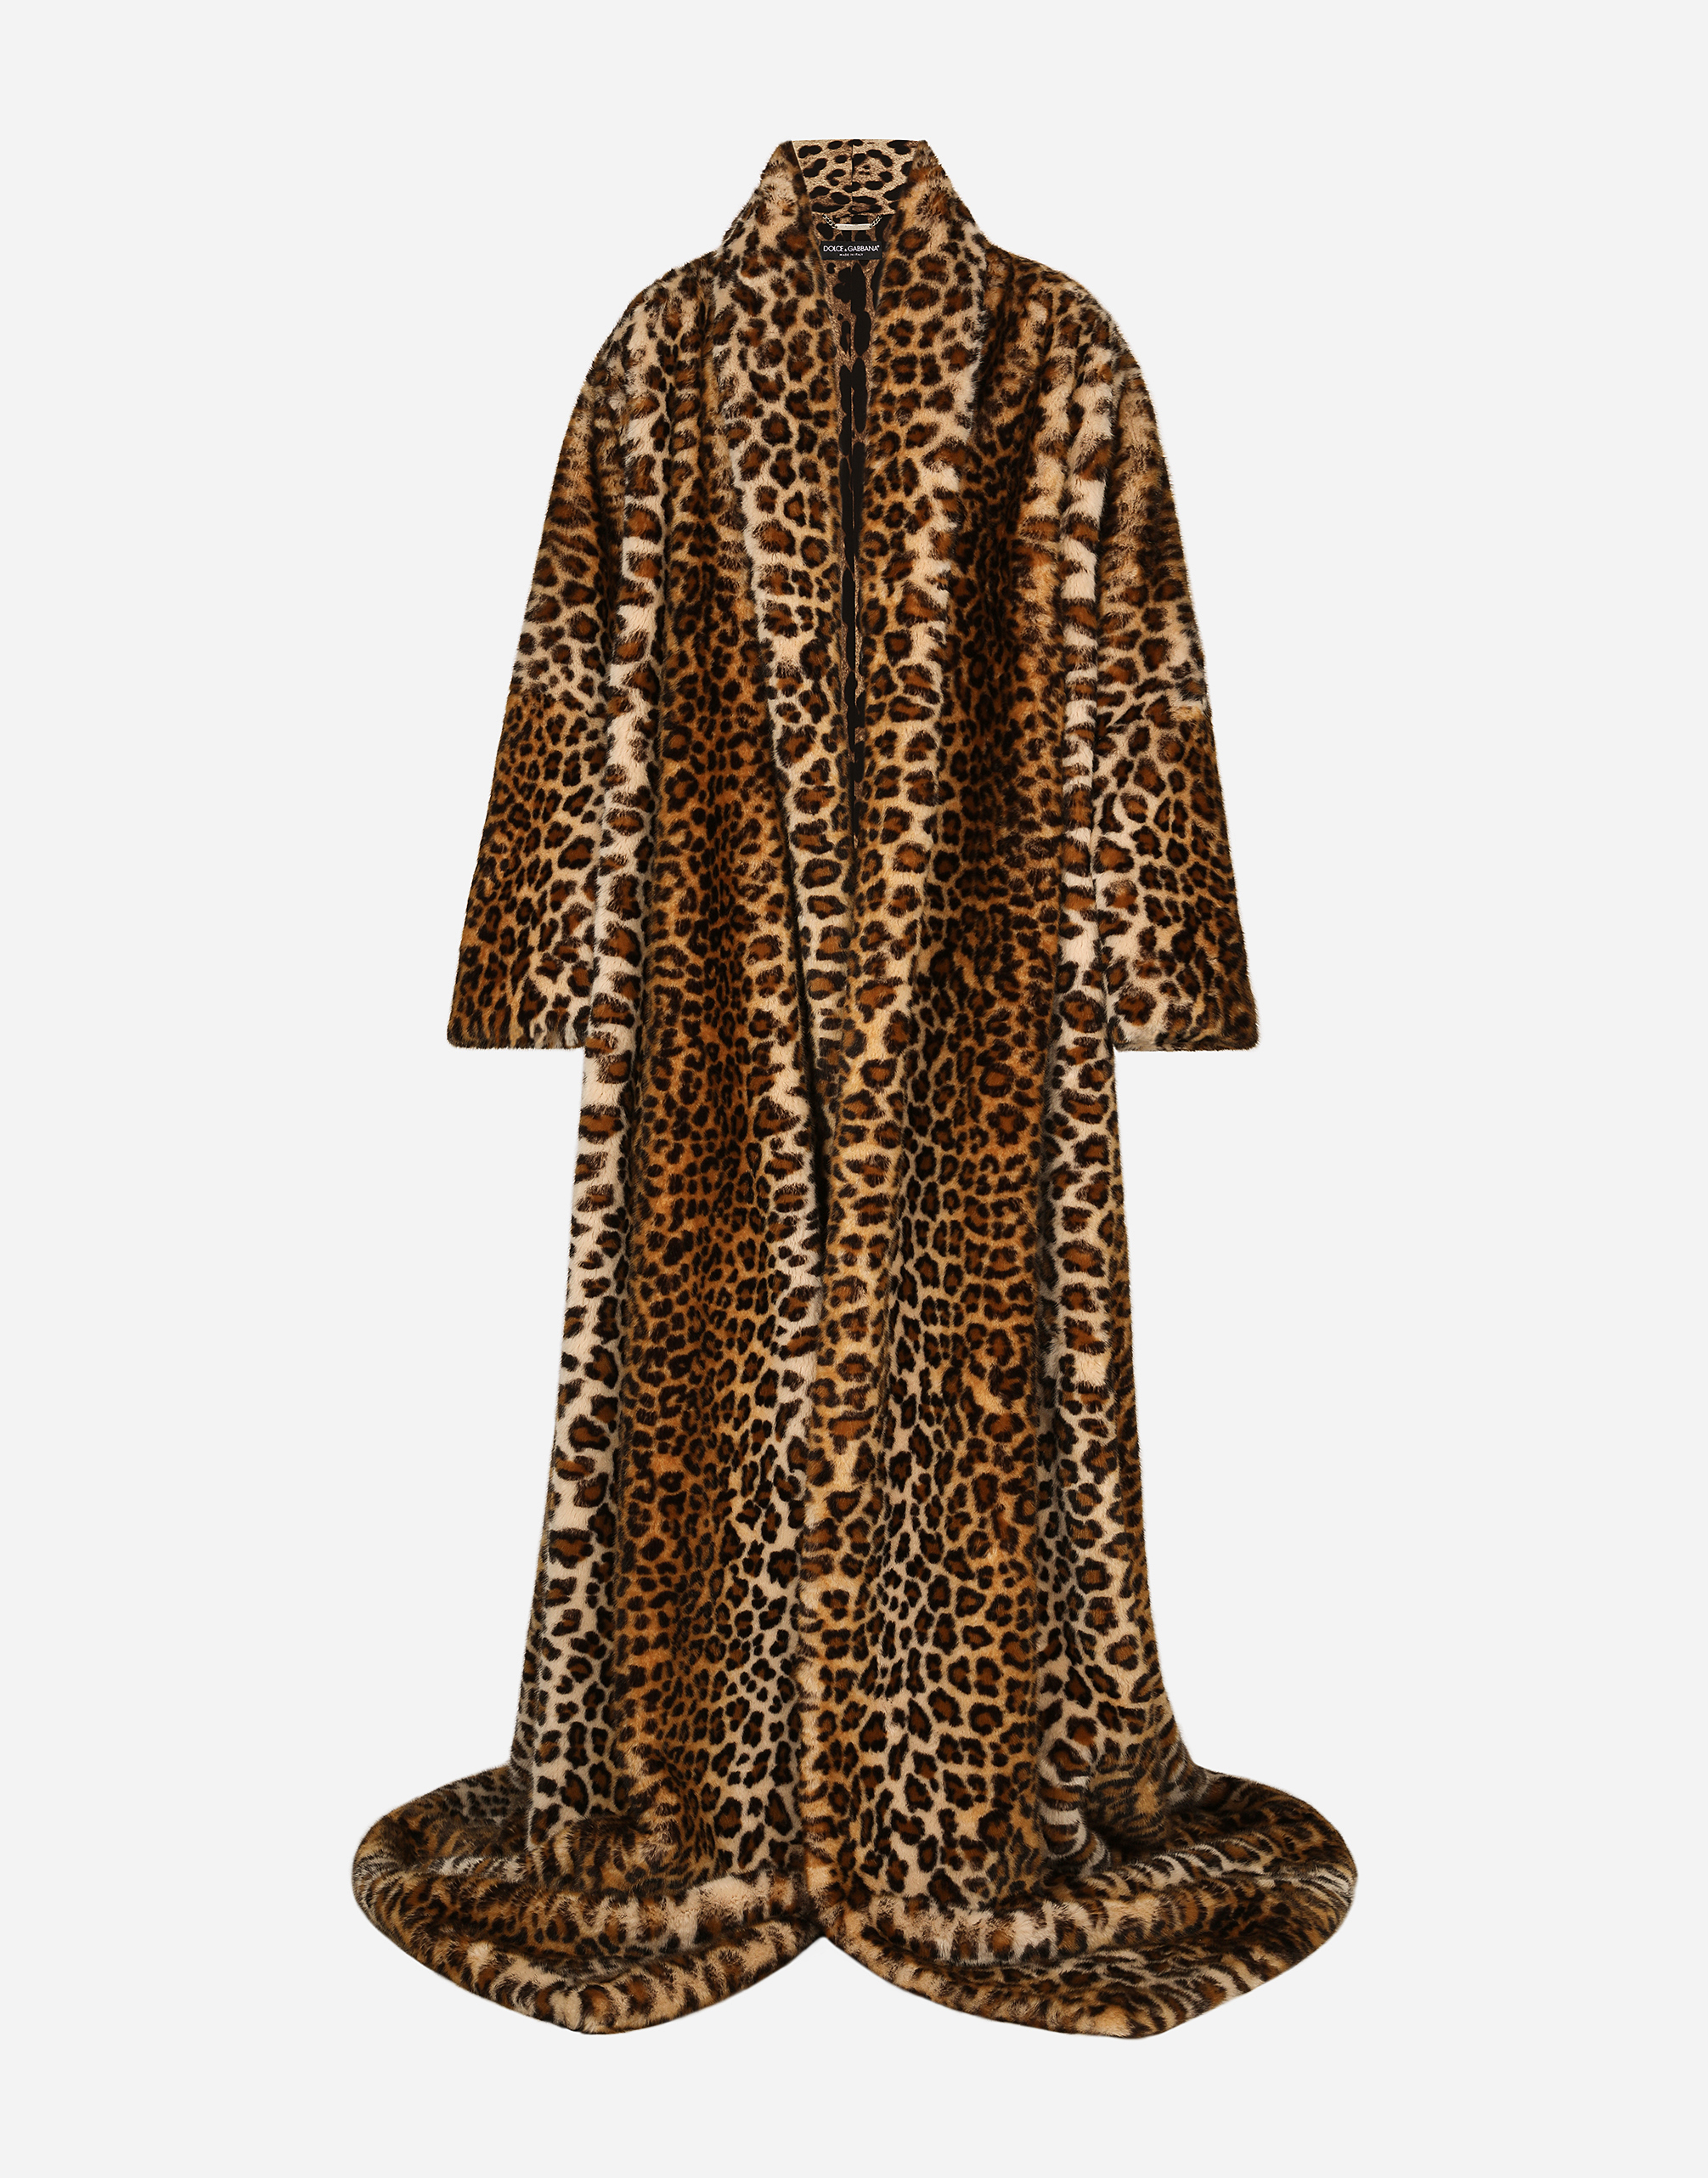 KIM DOLCE&GABBANA Long faux fur coat with leopard print in Animal Print